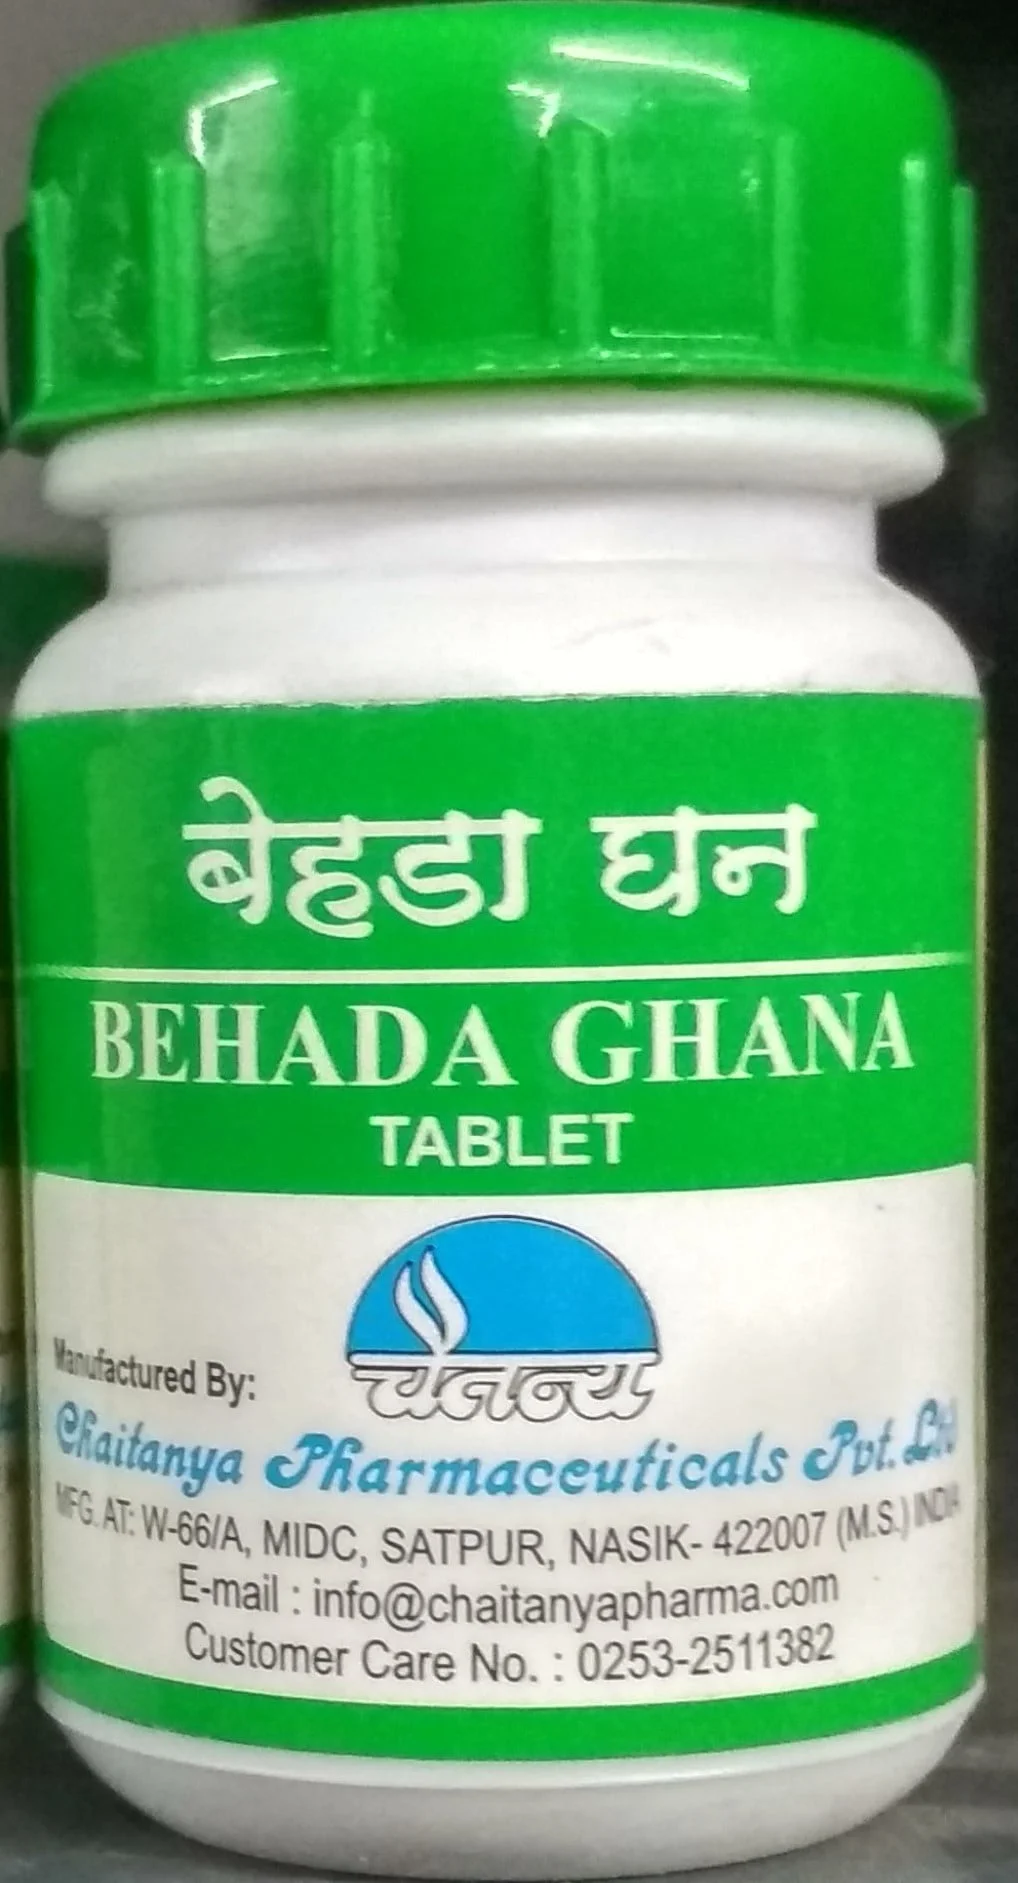 behada ghana 2000tab upto 20% off free shipping chaitanya pharmaceuticals